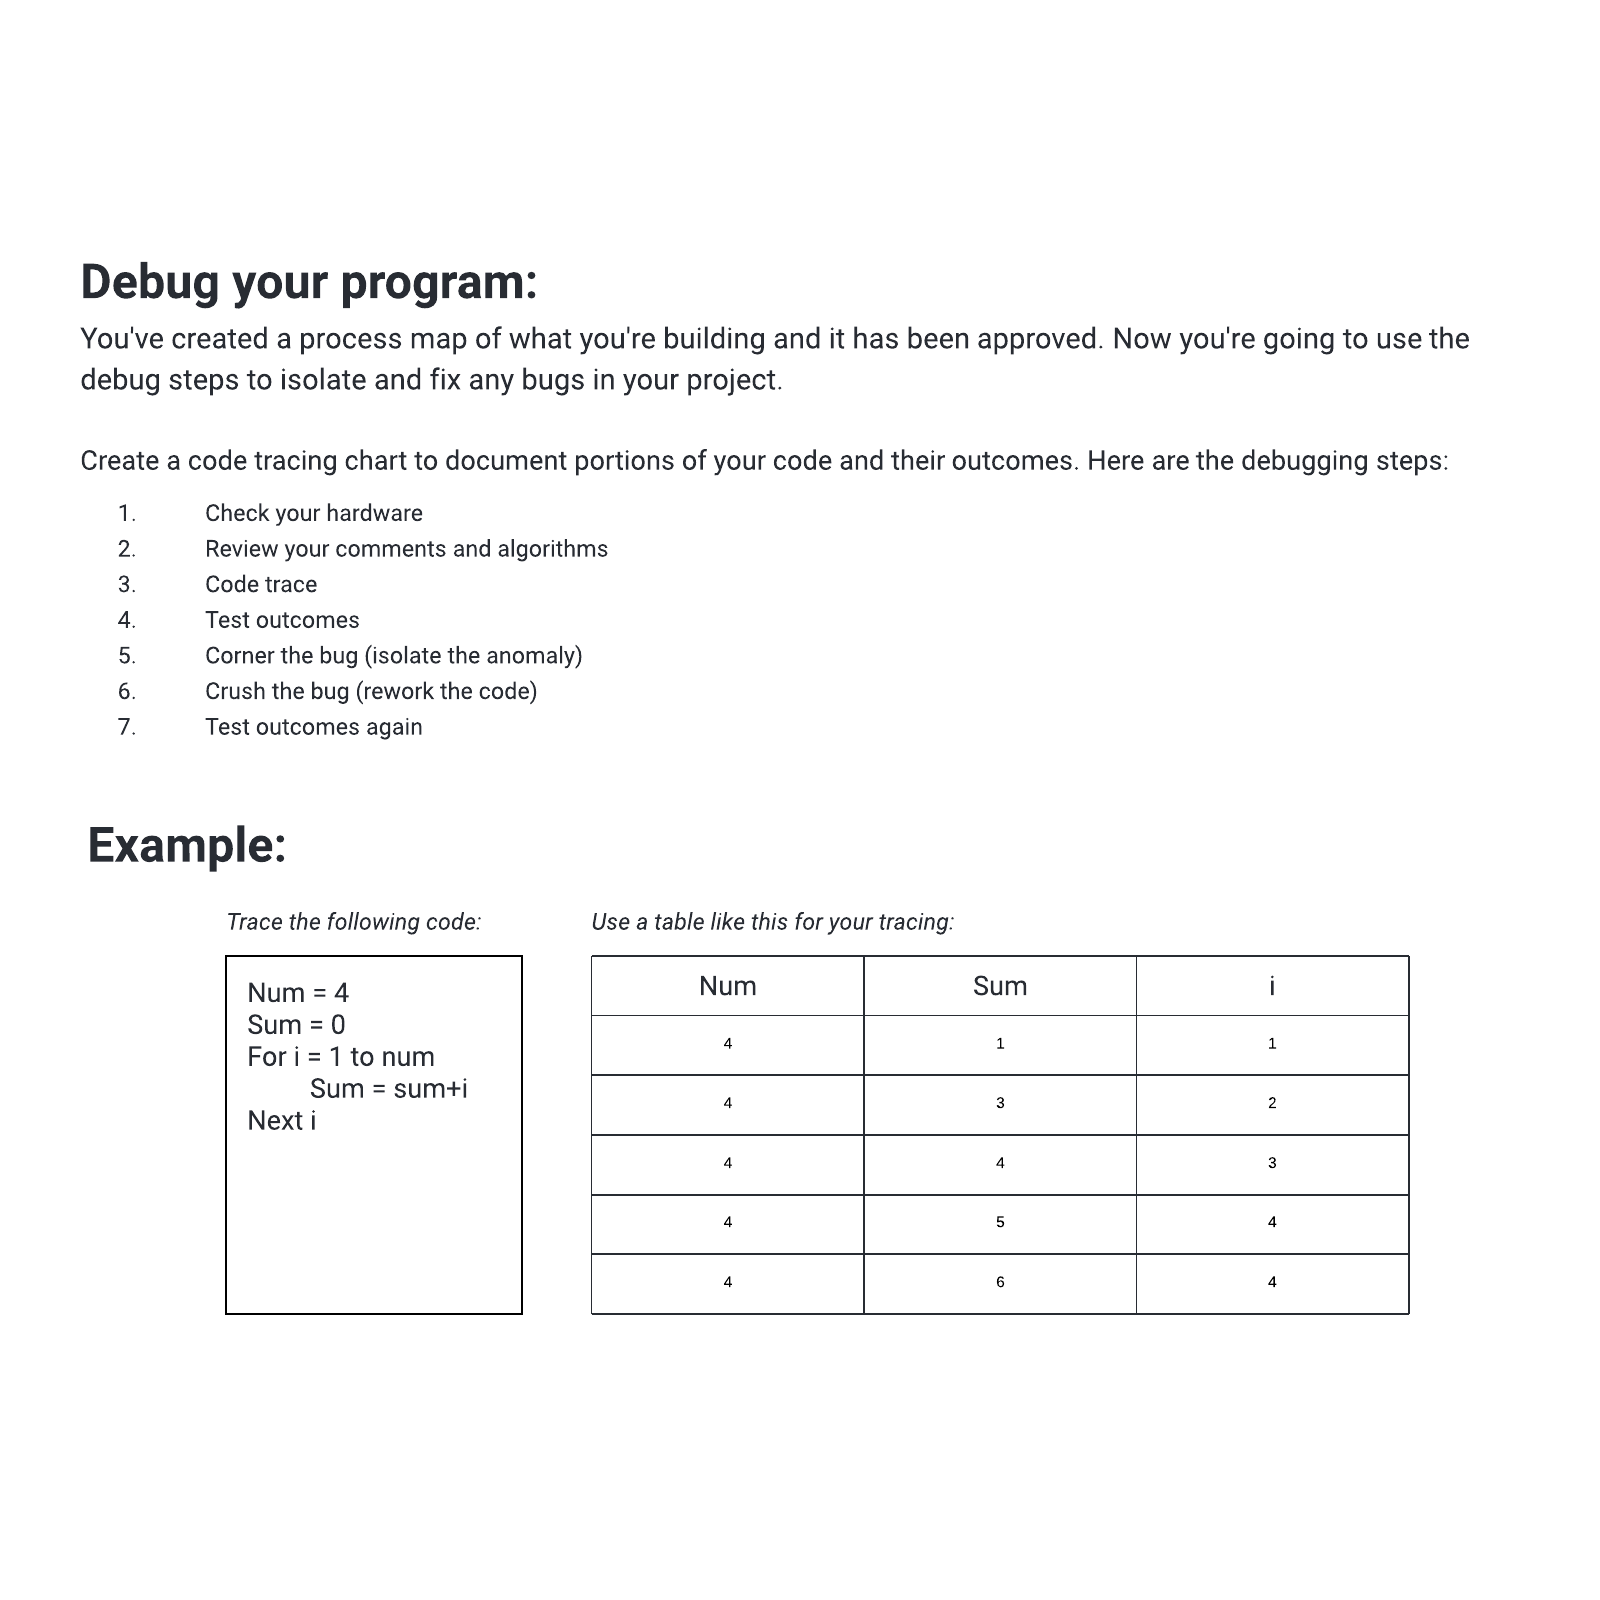 Debug your program example